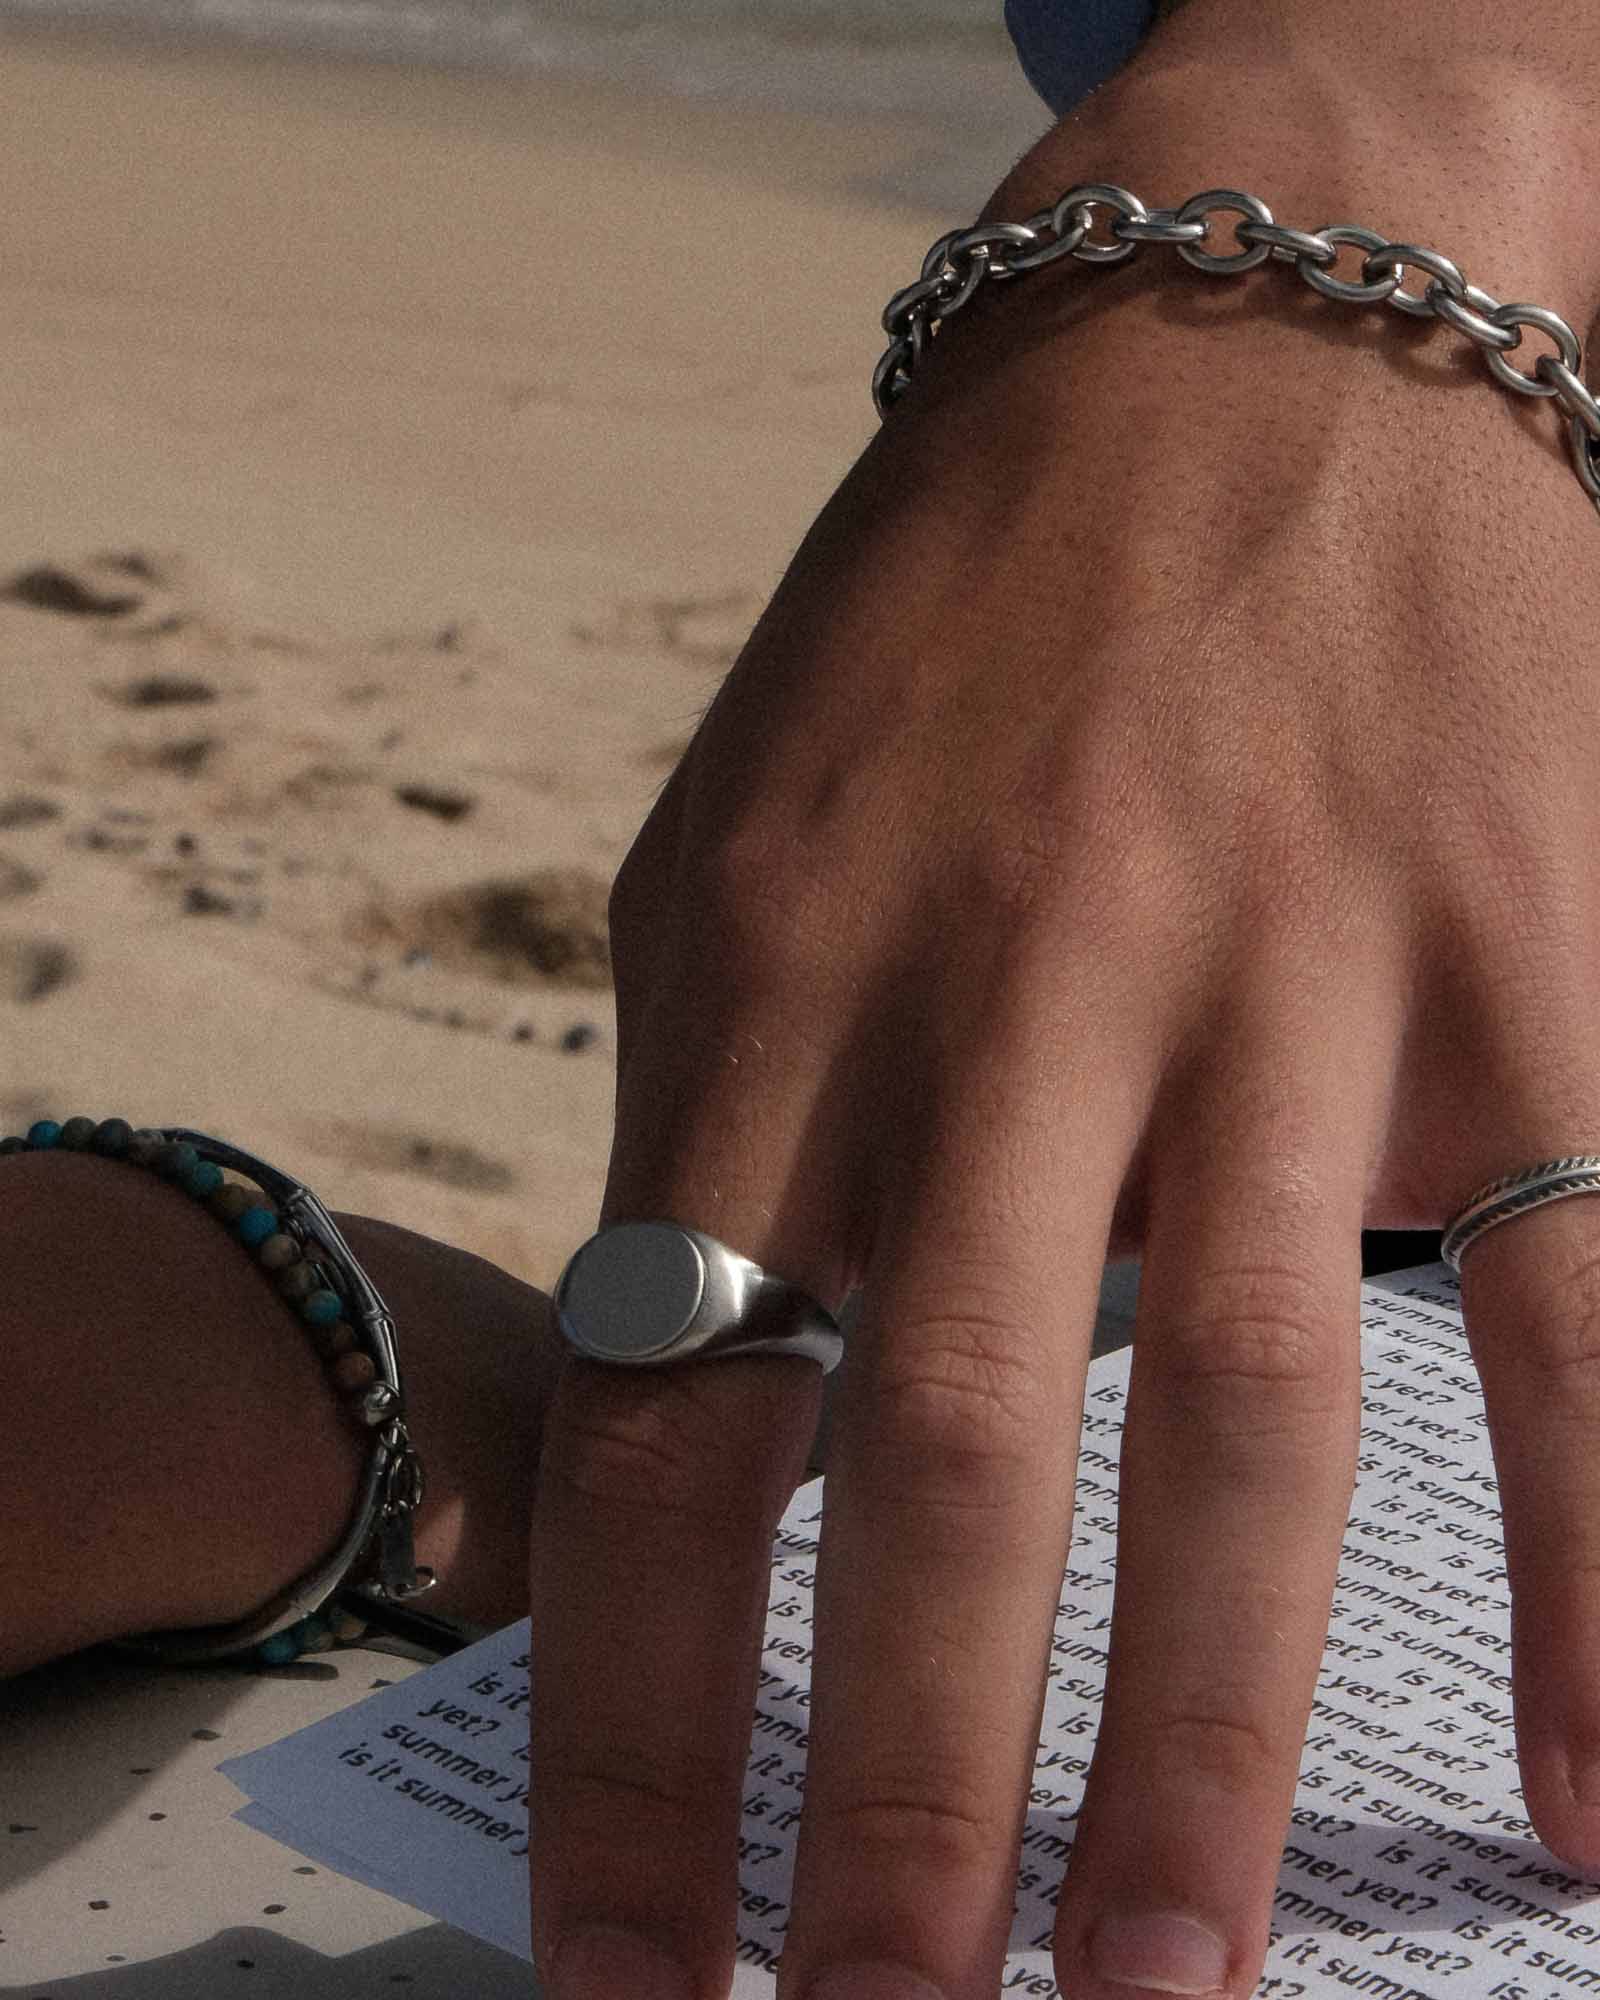 creta stainless steel ring on the model's hand